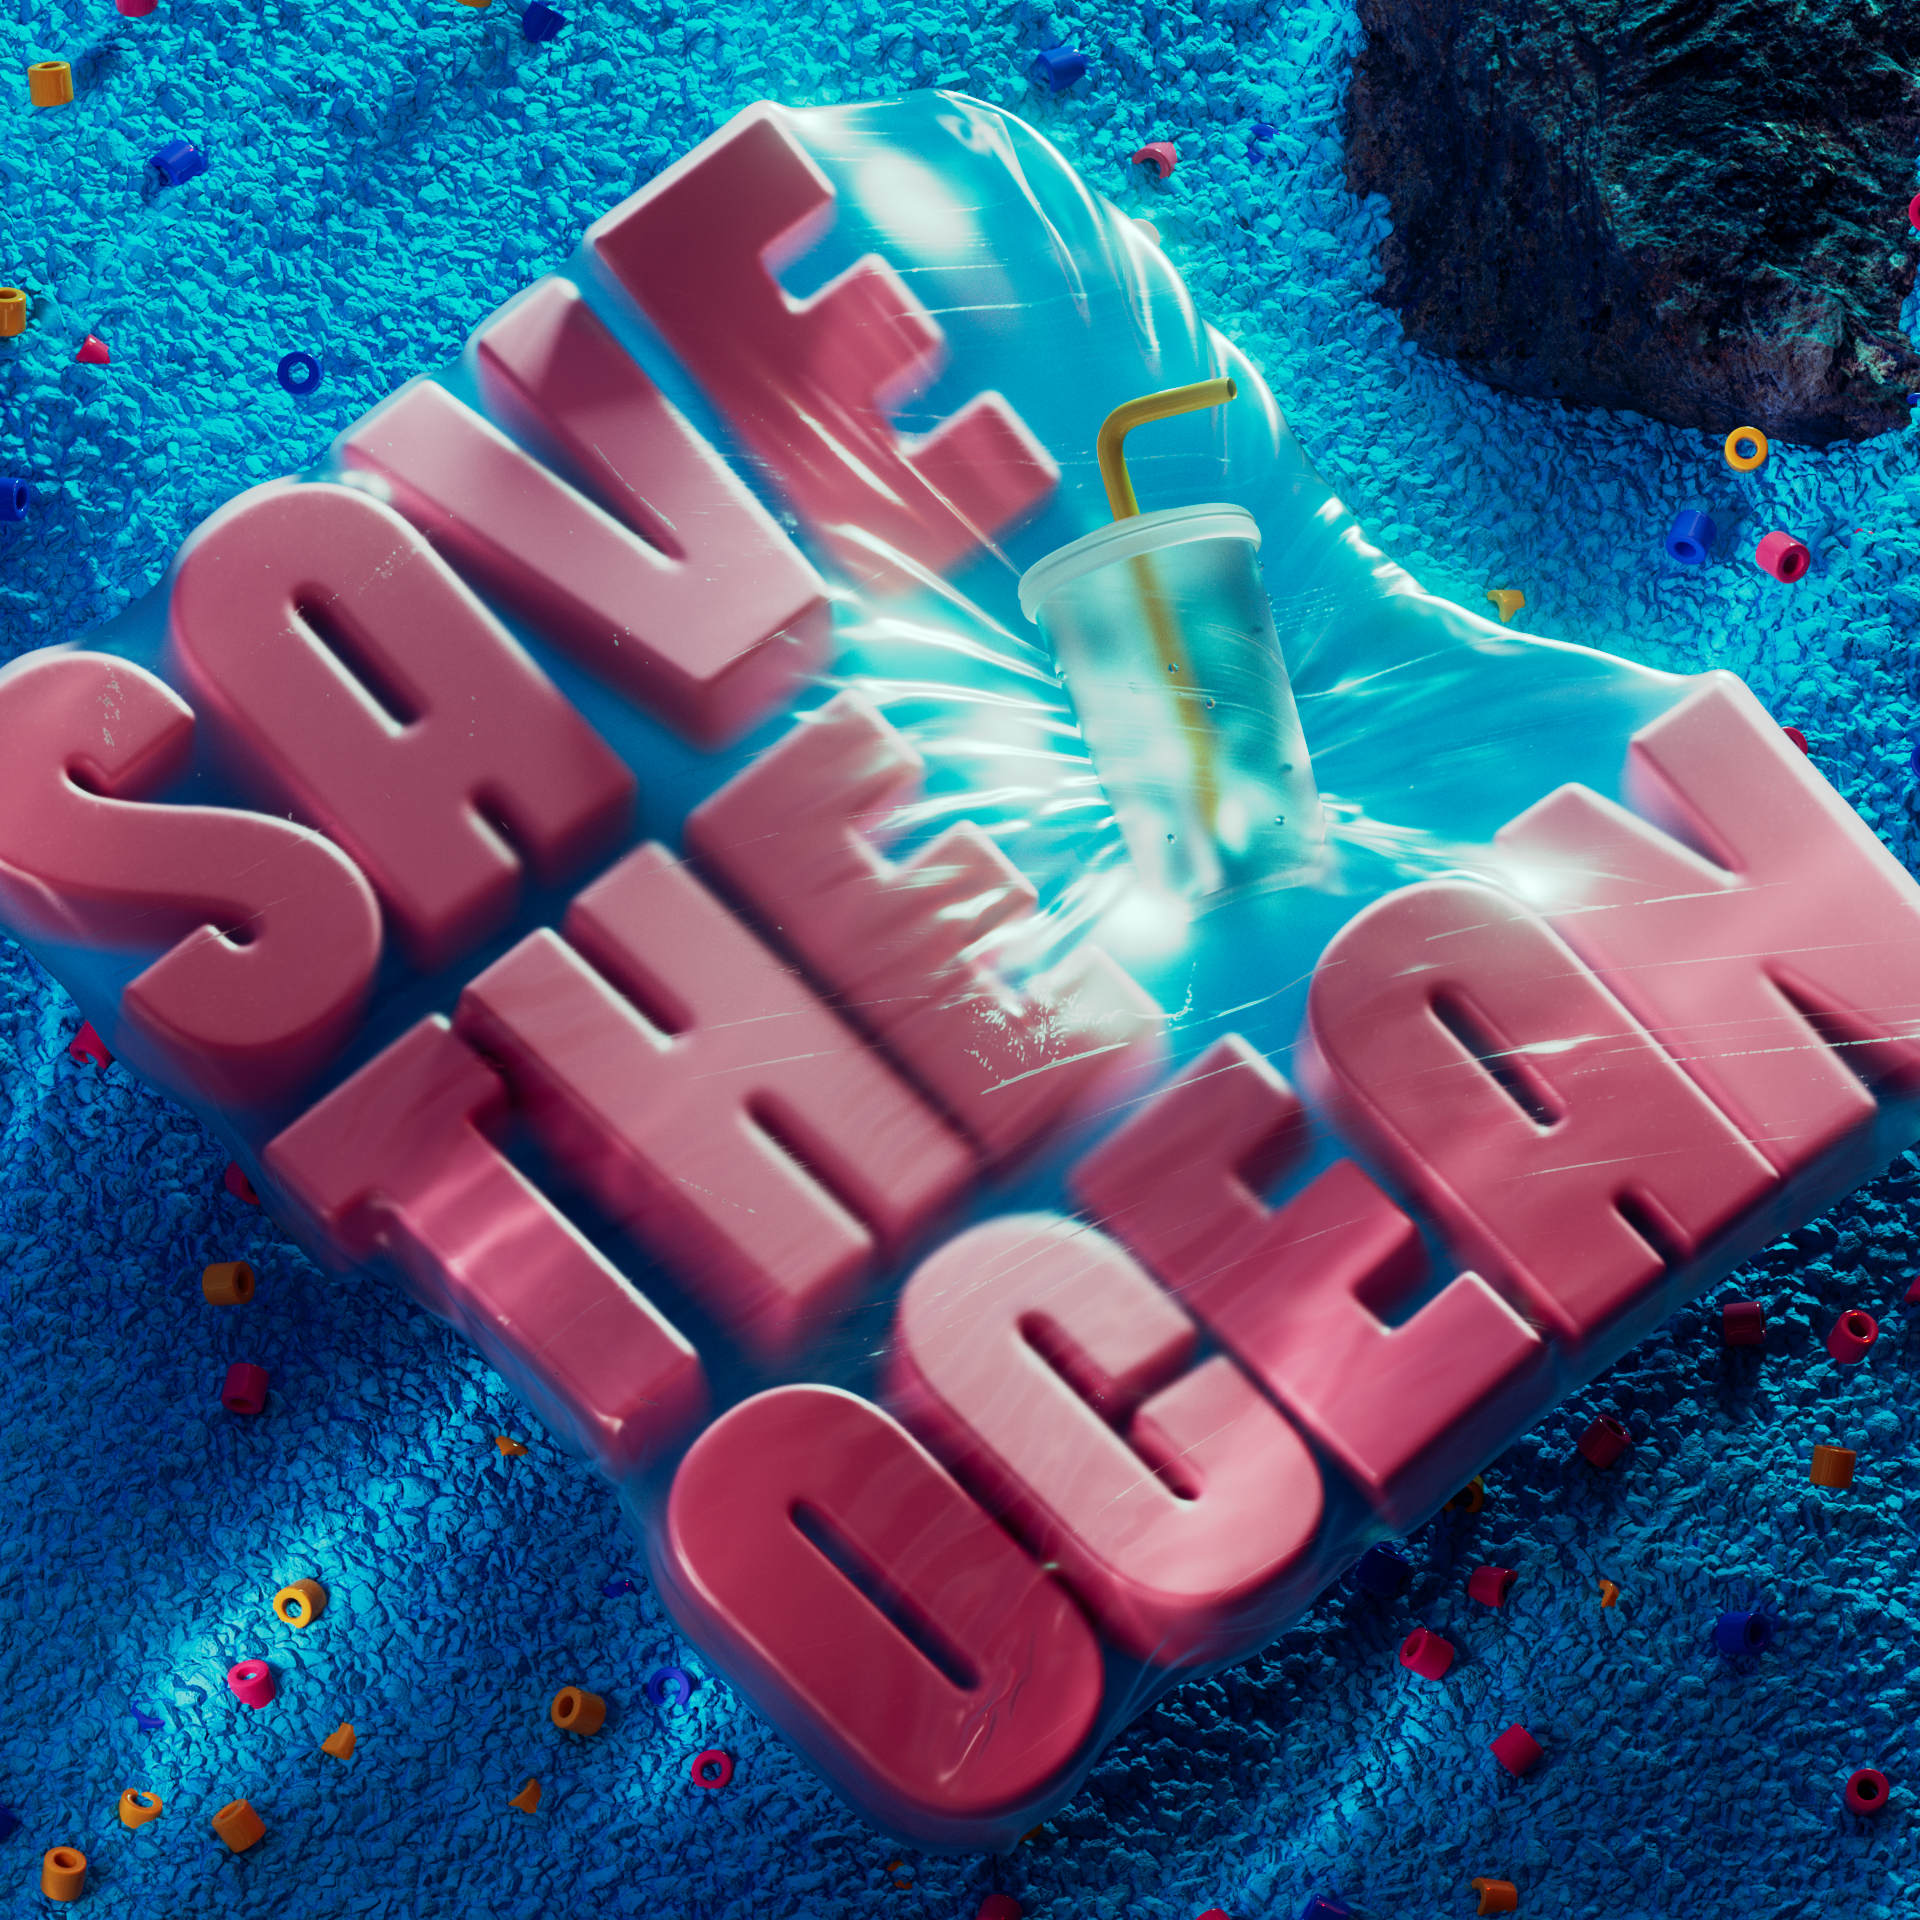 08 Save the ocean